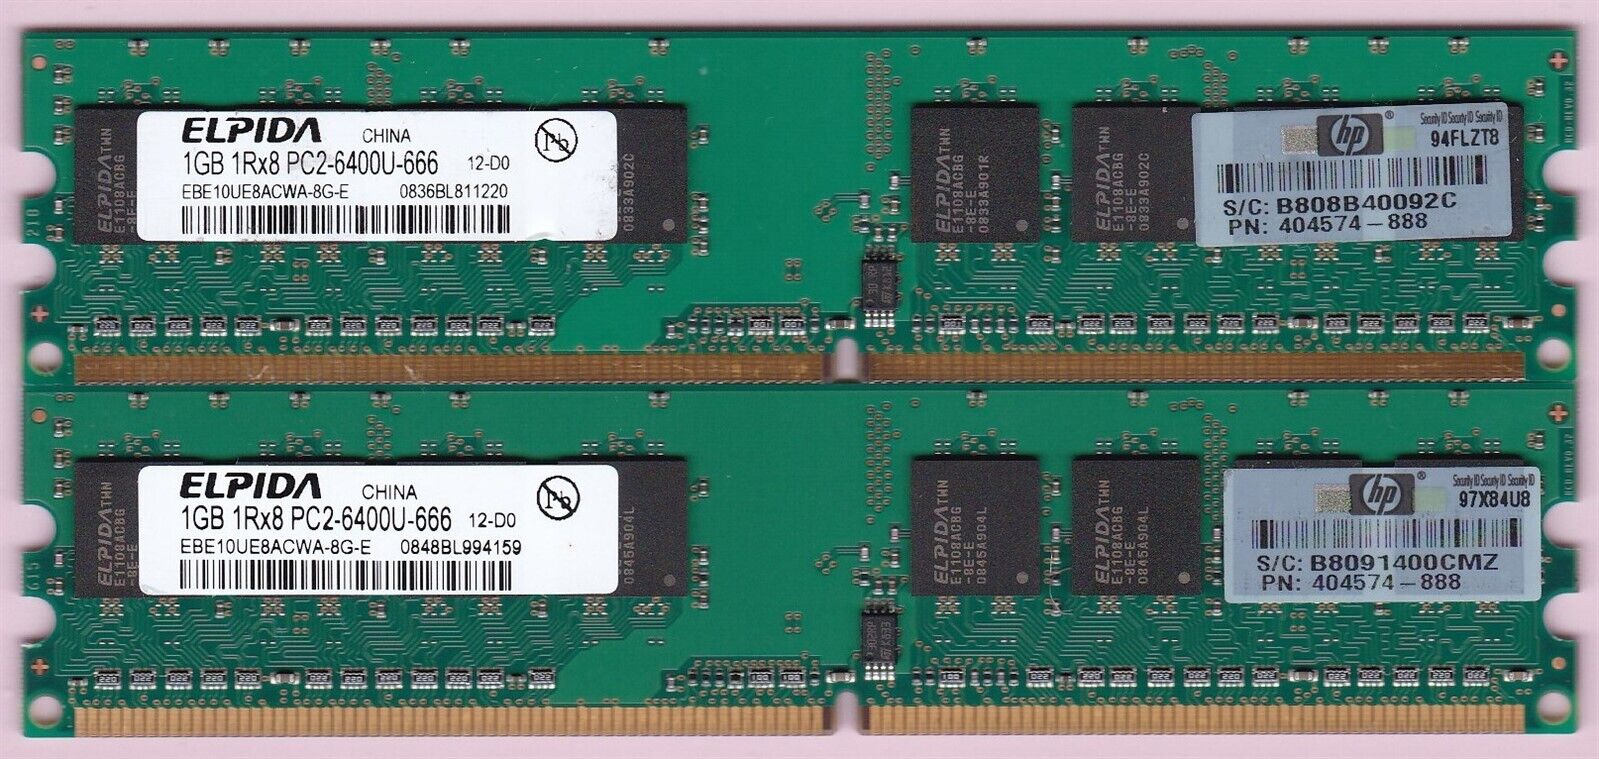 2GB 2x1GB PC2-6400 DDR2-800 ELPIDA EBE10UE8ACWA-8G-E HP 404574-888 MEMORY KIT